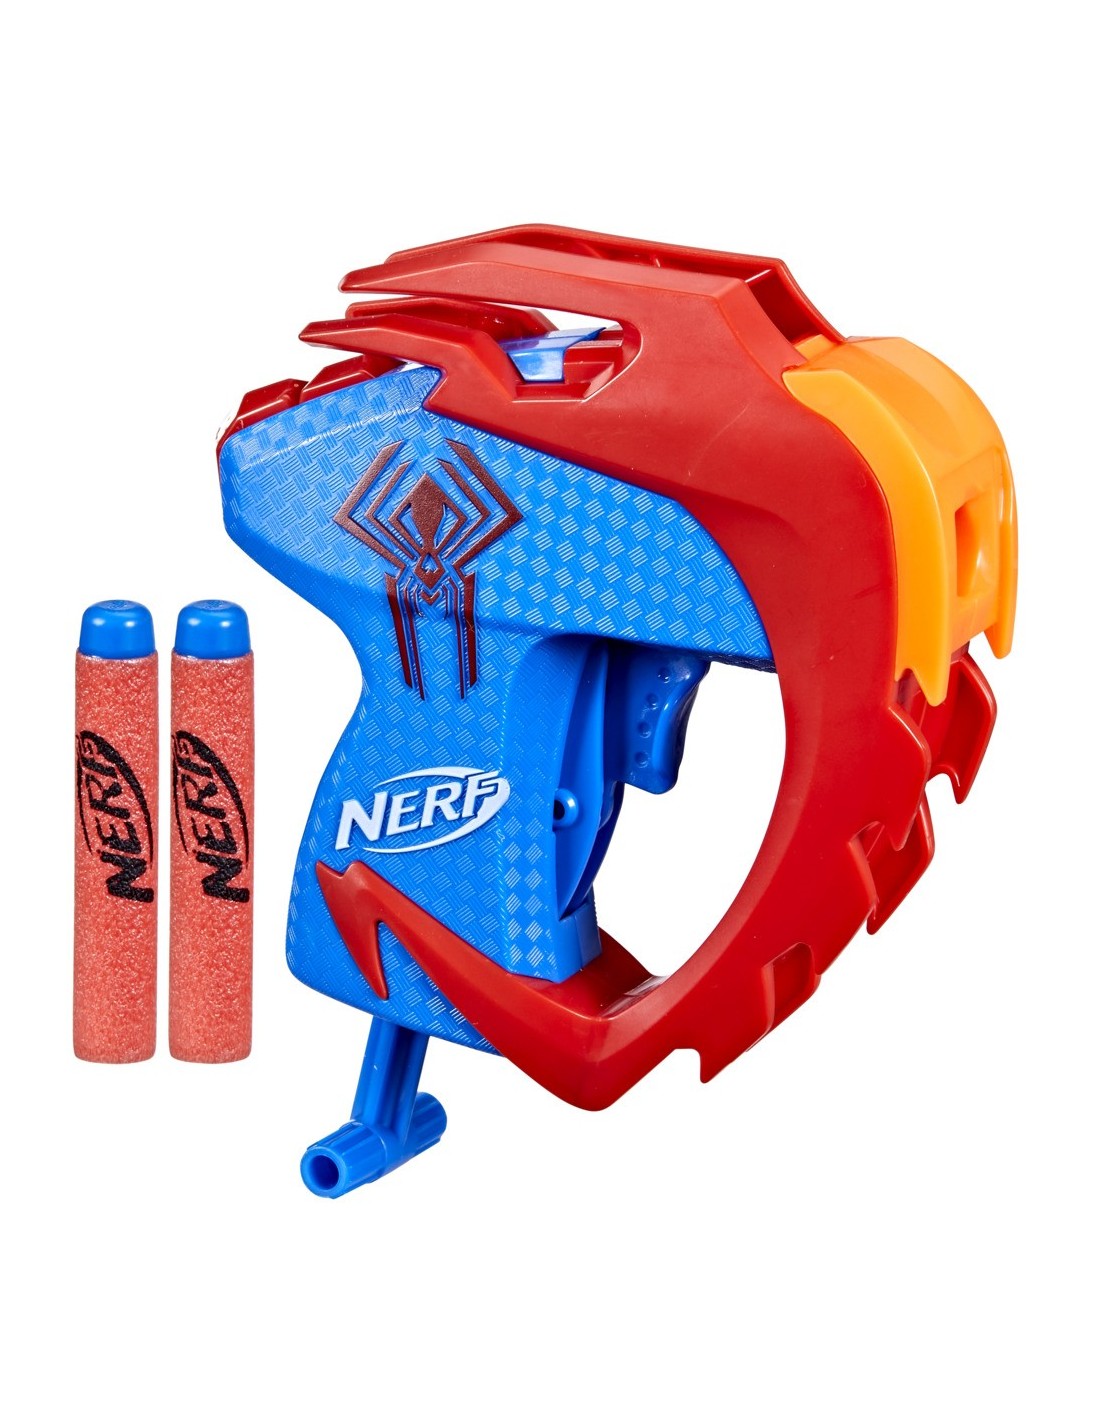 Shop for Nerf Roblox Viper Strike Cobra F7601